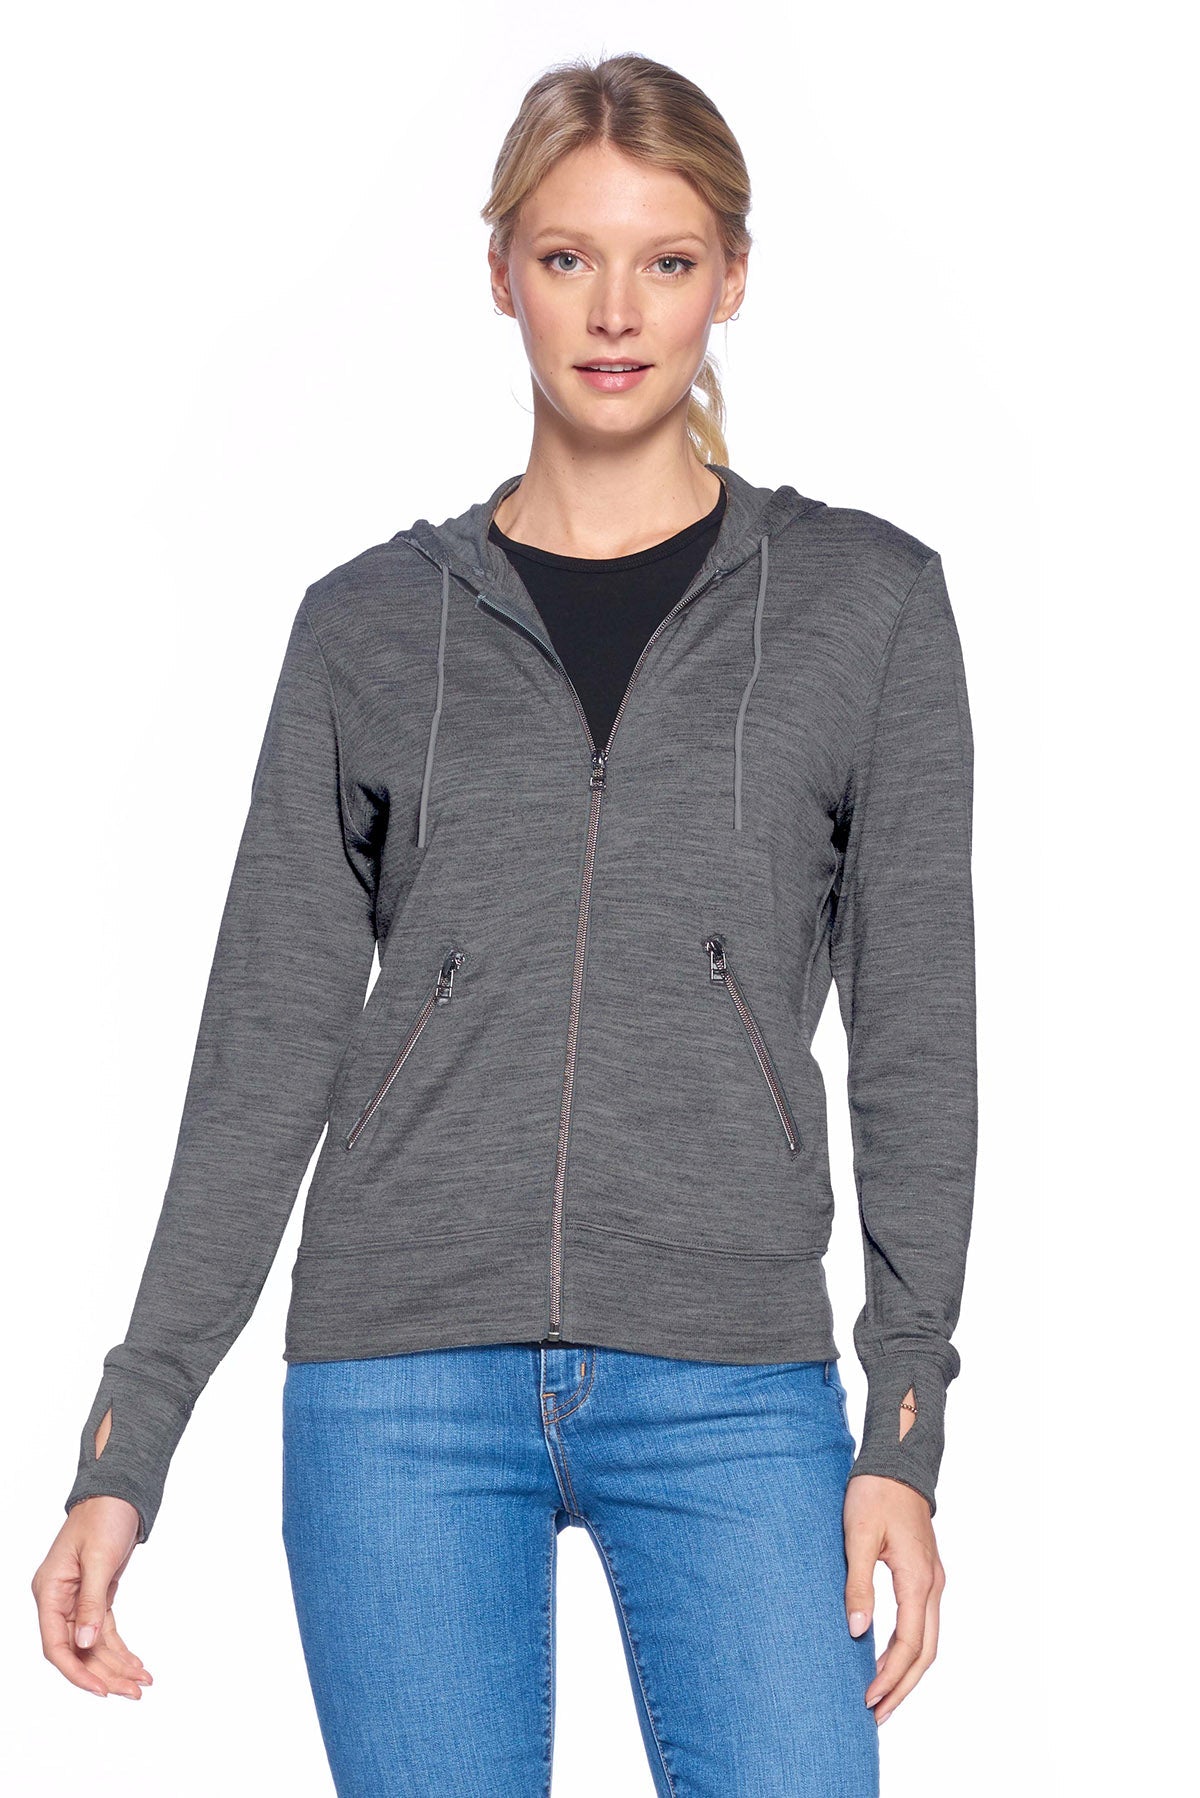 Model wearing the merino wool travel hoodie for women in dark steel